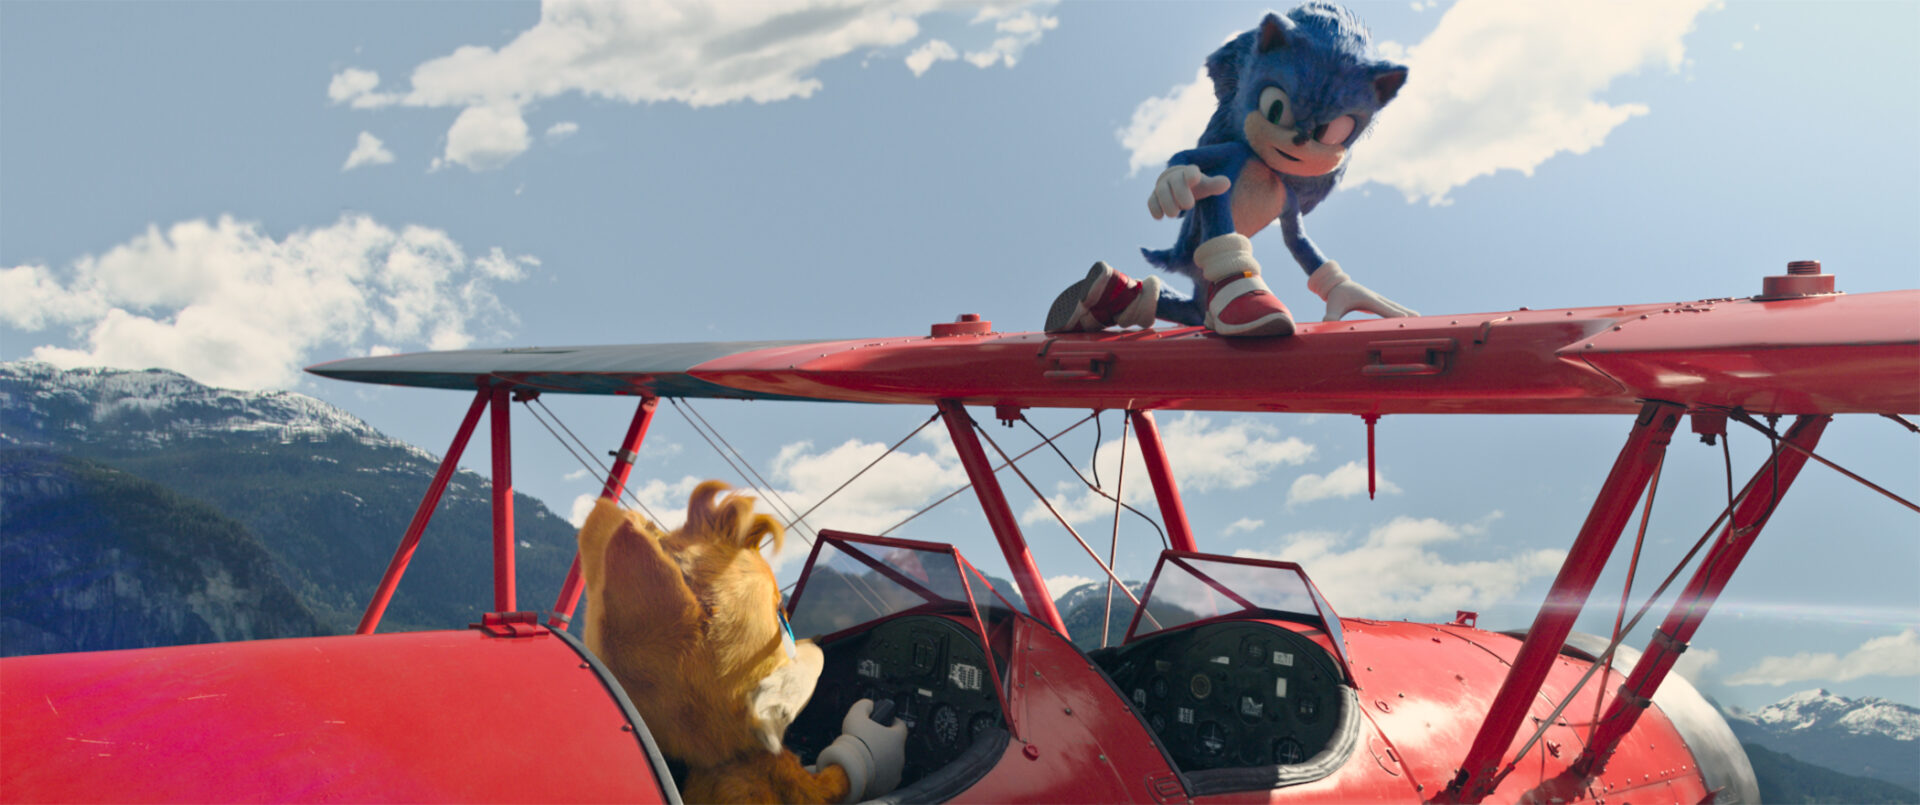 Sonic the Hedgehog 2 – Trailer Breakdown and Easter Eggs Analysis